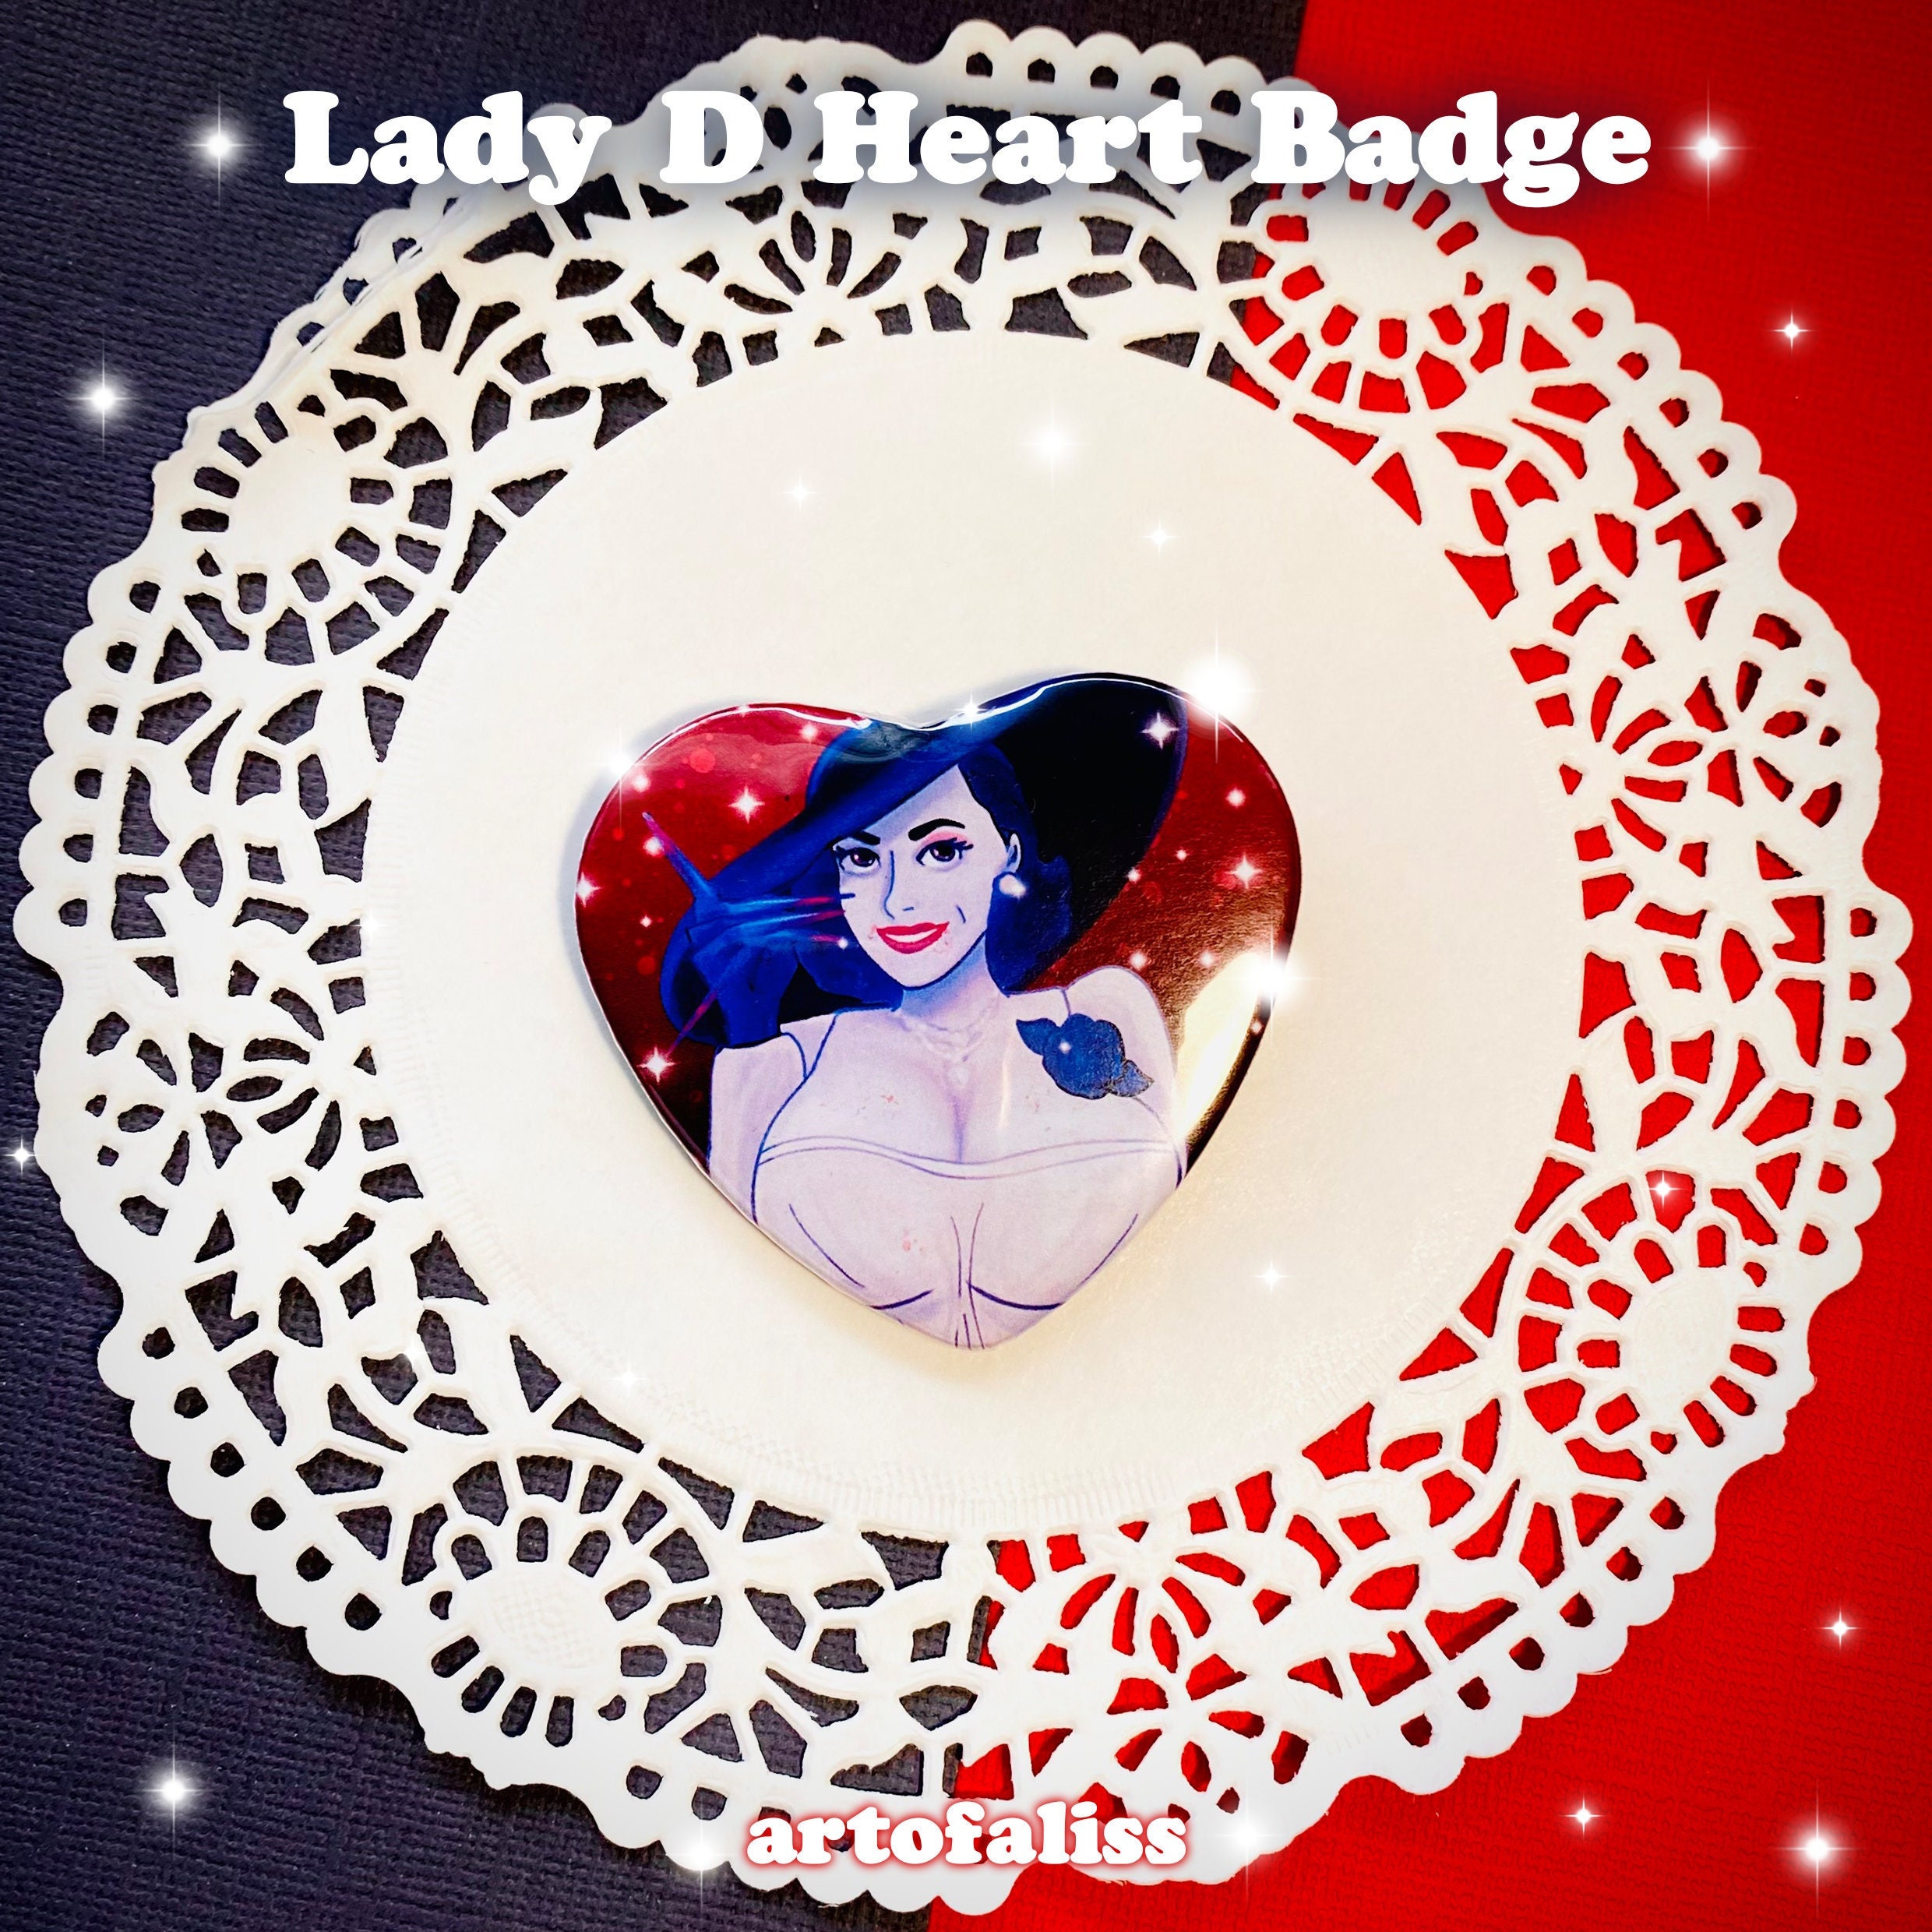 Lady Dimitrescu Heart Badge